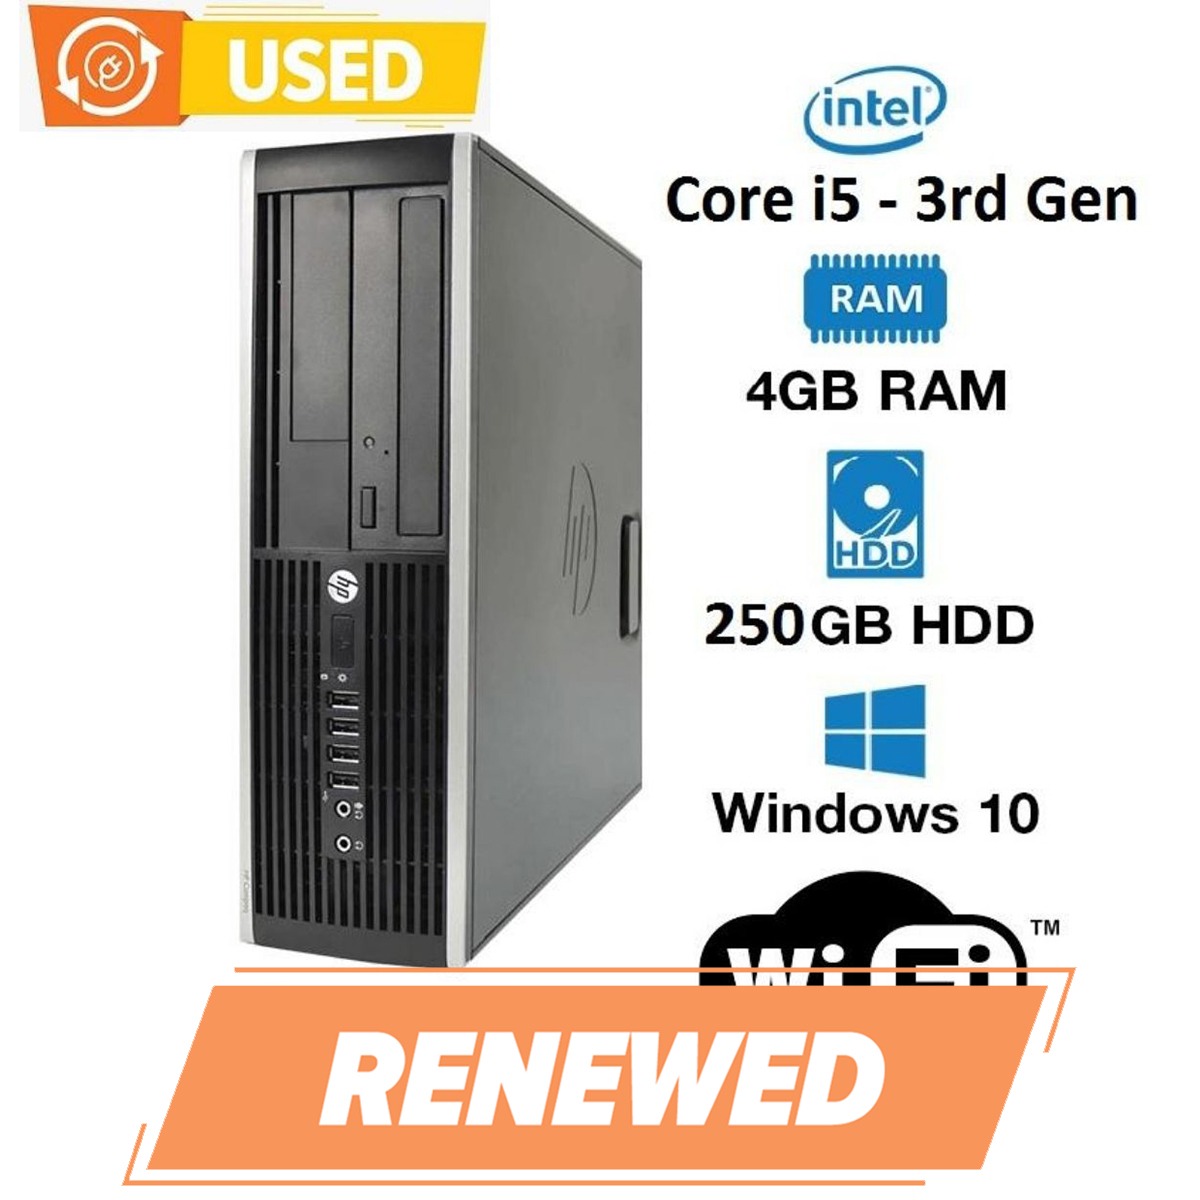 Renewed 00 Sff Desktop Computer Intel Core I5 3rd Gen 4gb Ddr3 250gb Hdd Windows 10 Wifi Buy Online At Best Prices In Pakistan Daraz Pk